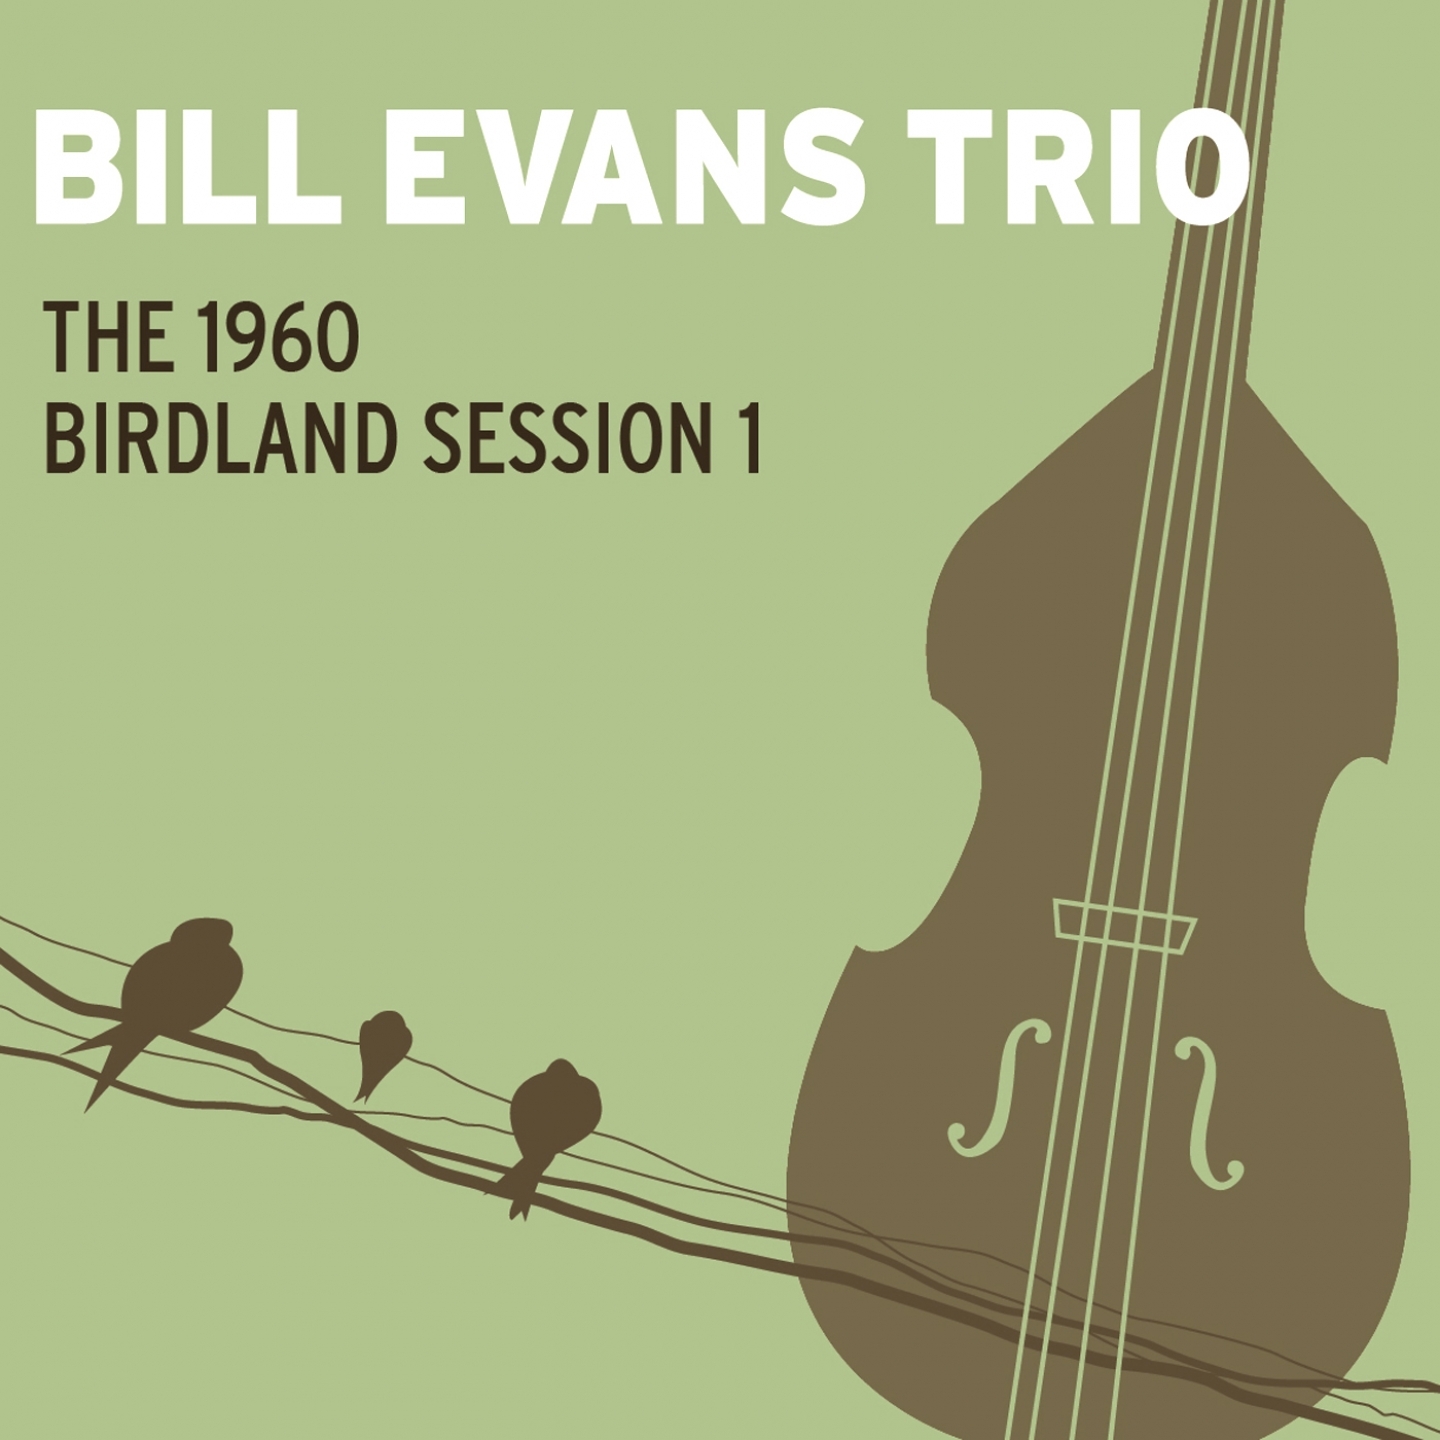 The 1960 Birdland Session 1